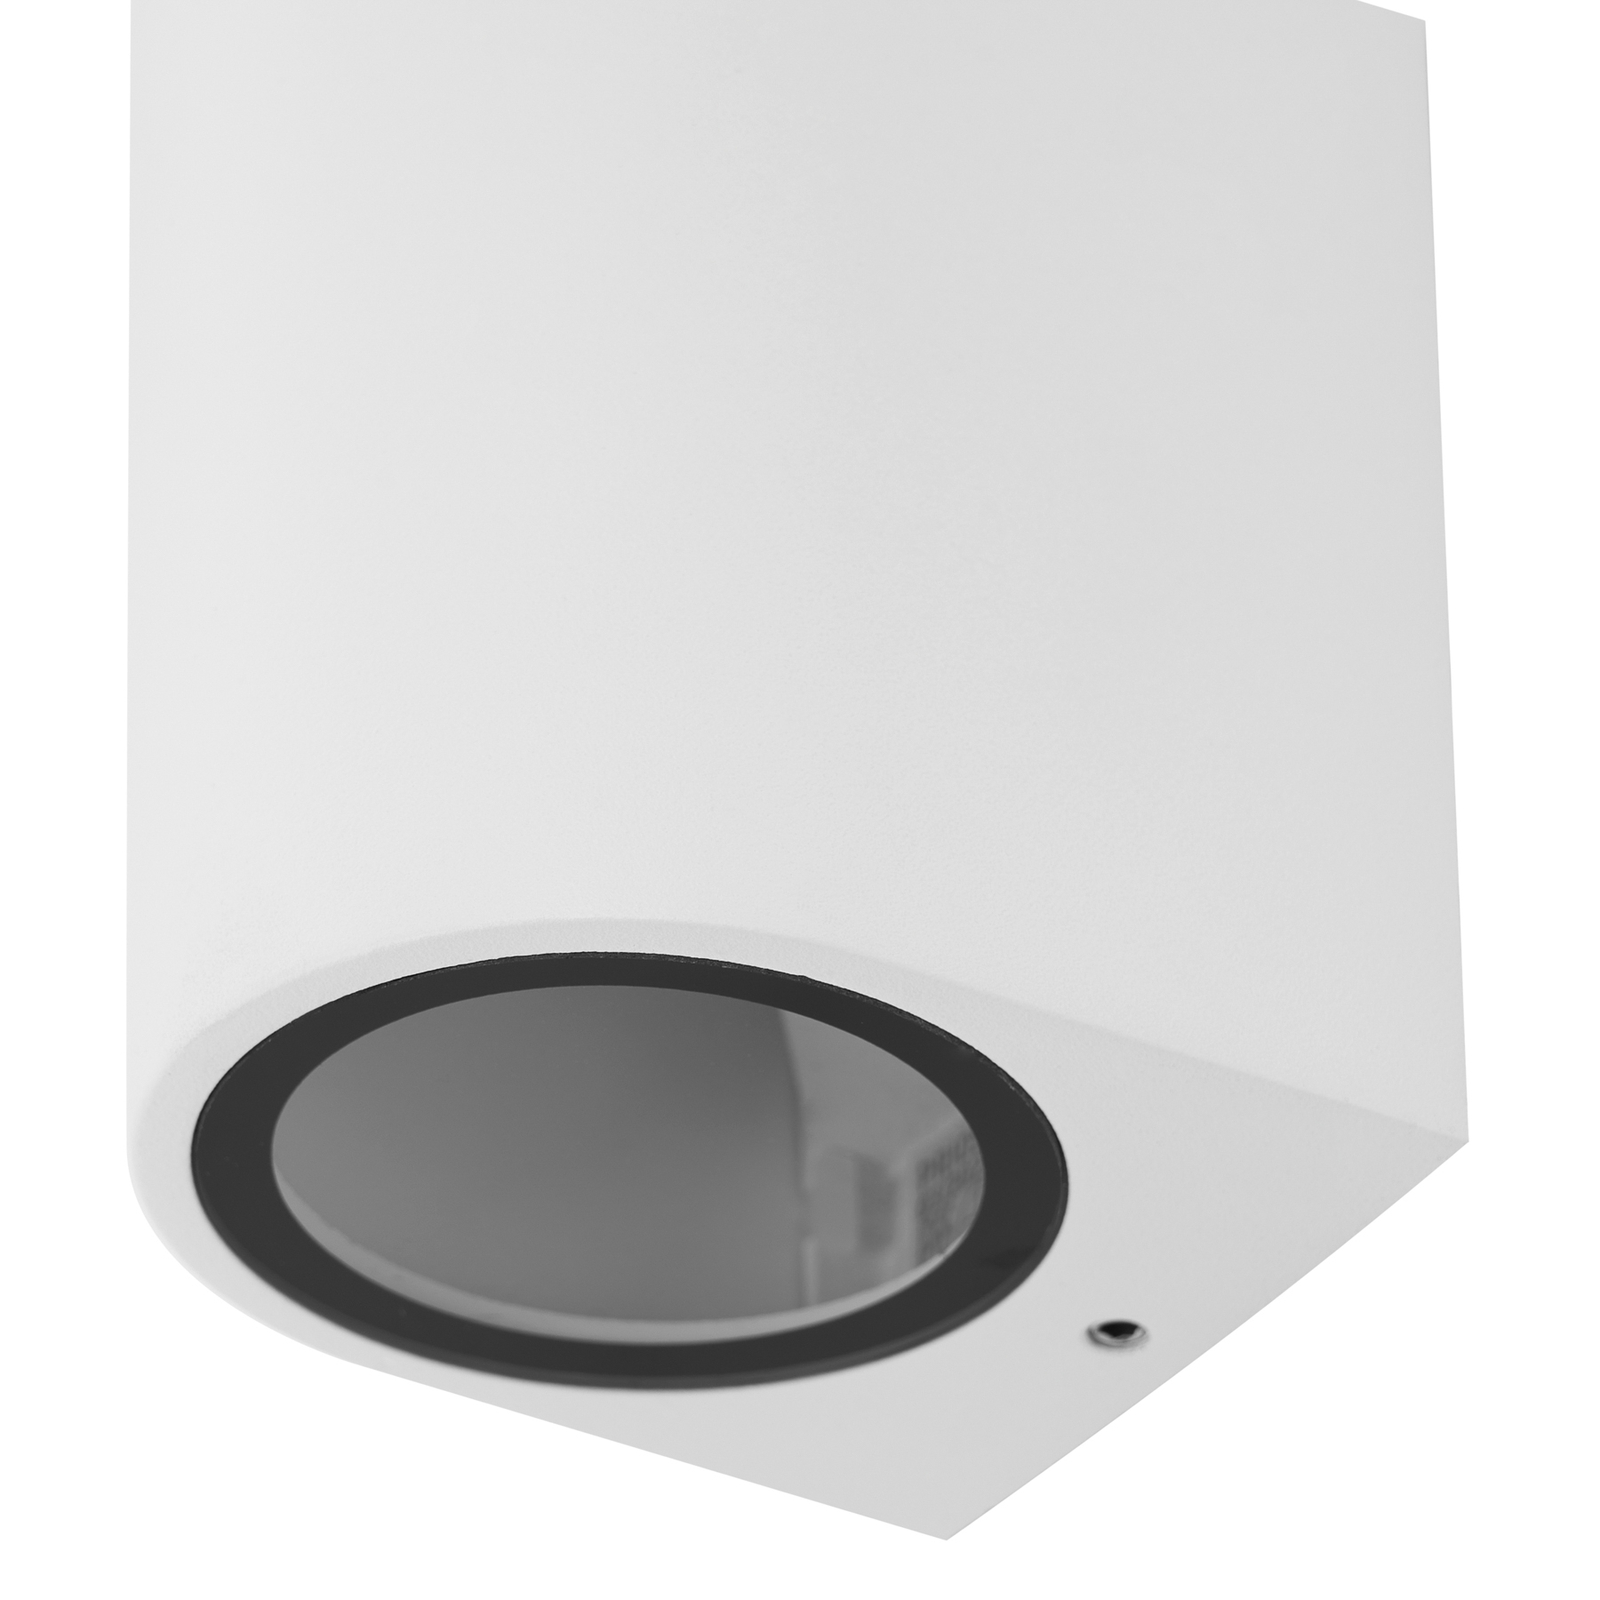 Prios buitenwandlamp Tetje, wit, rond, 10 cm, set van 4